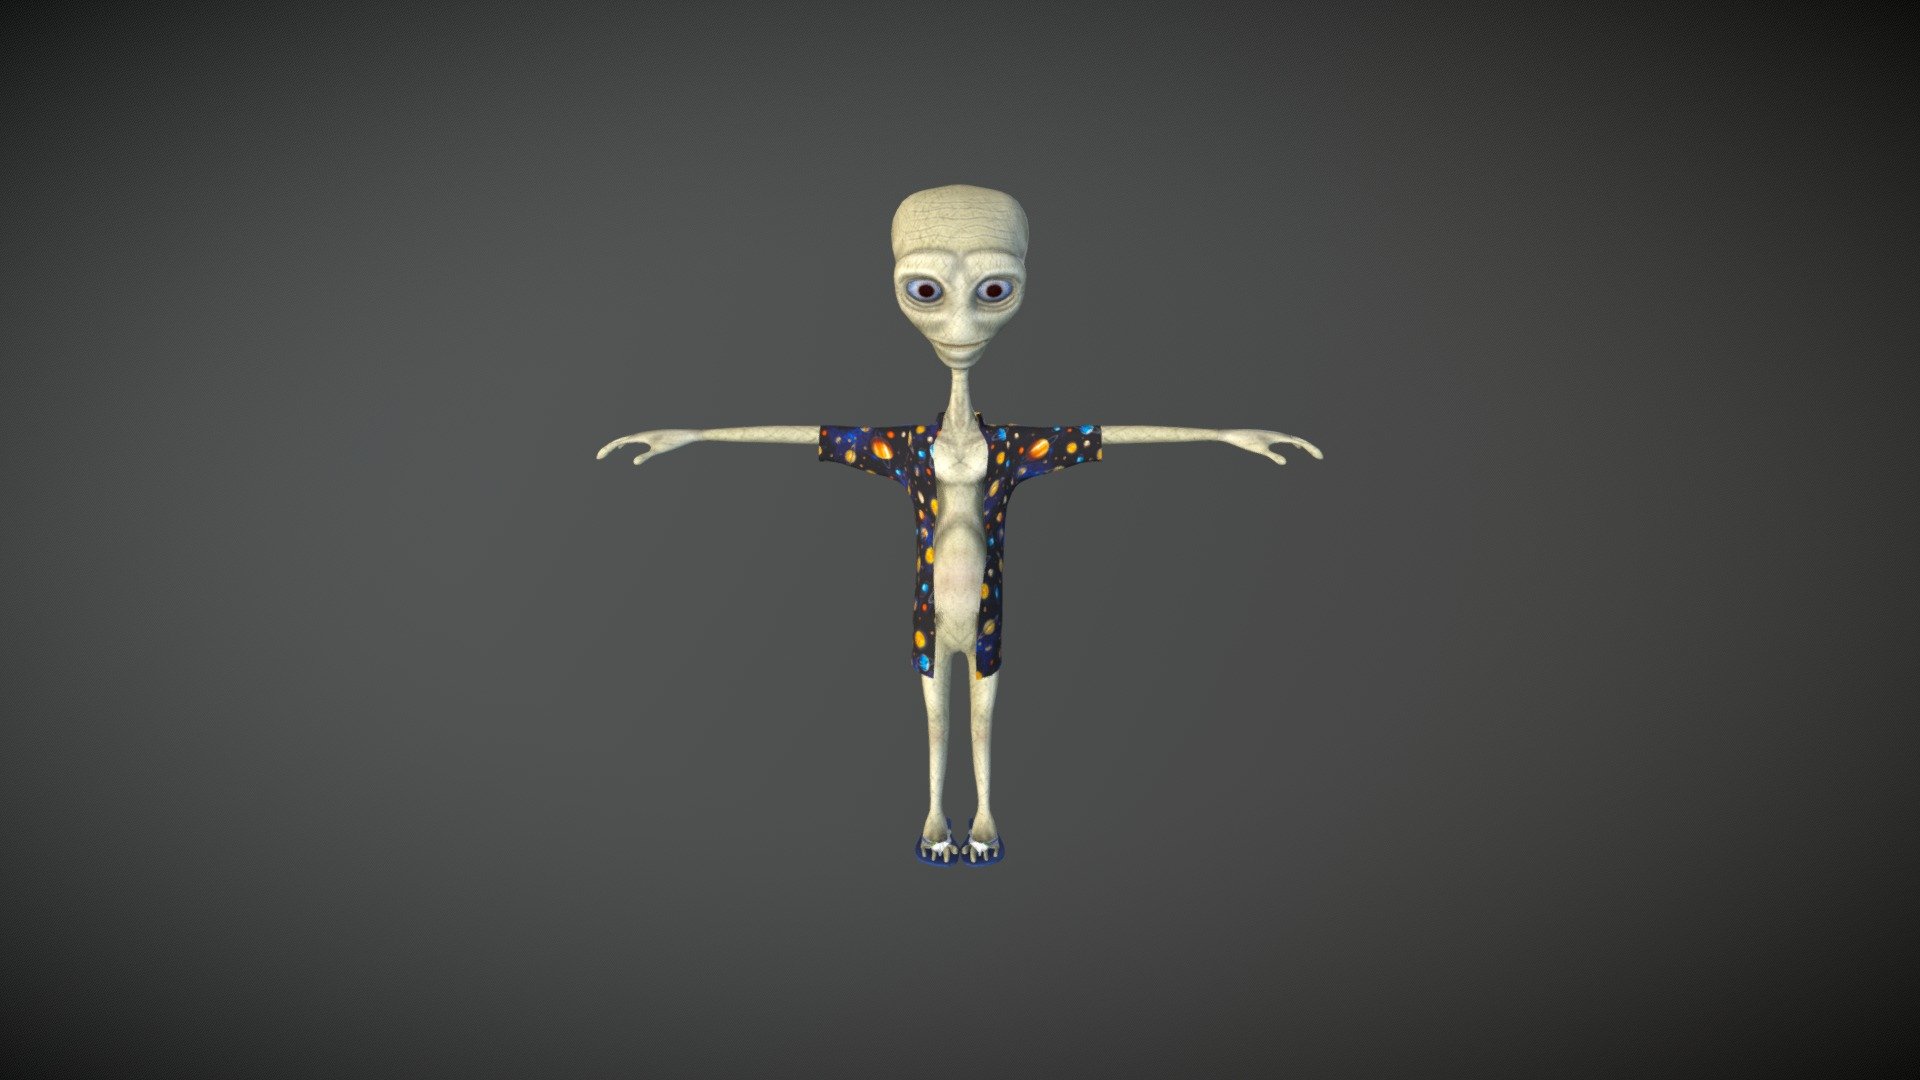 Alien Frank, made in Blender 2.79 - Alien Frank - Download Free 3D model by DavidePrestino 3d model